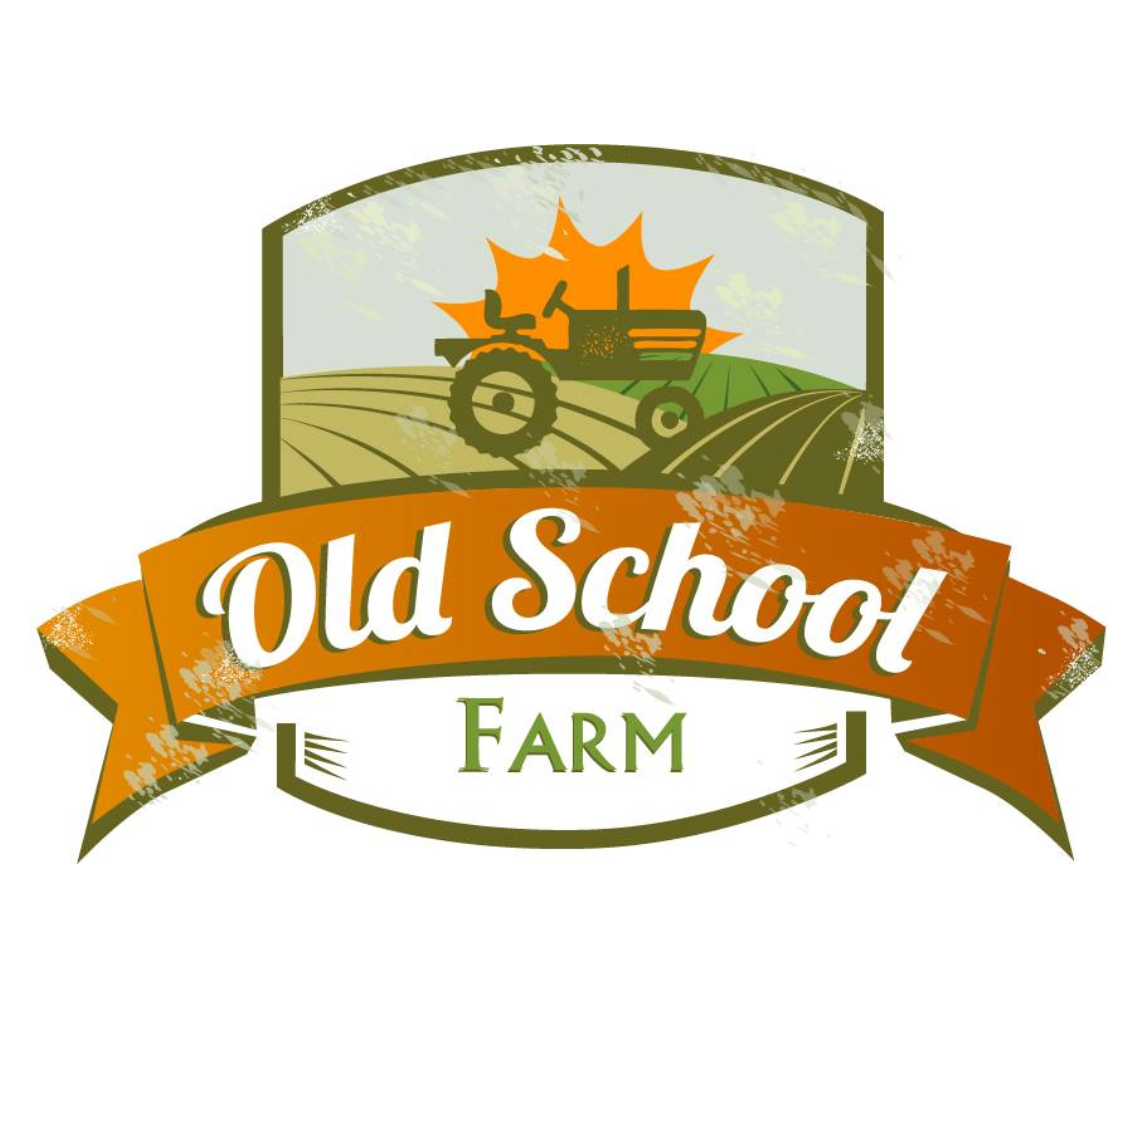 Old School Farm